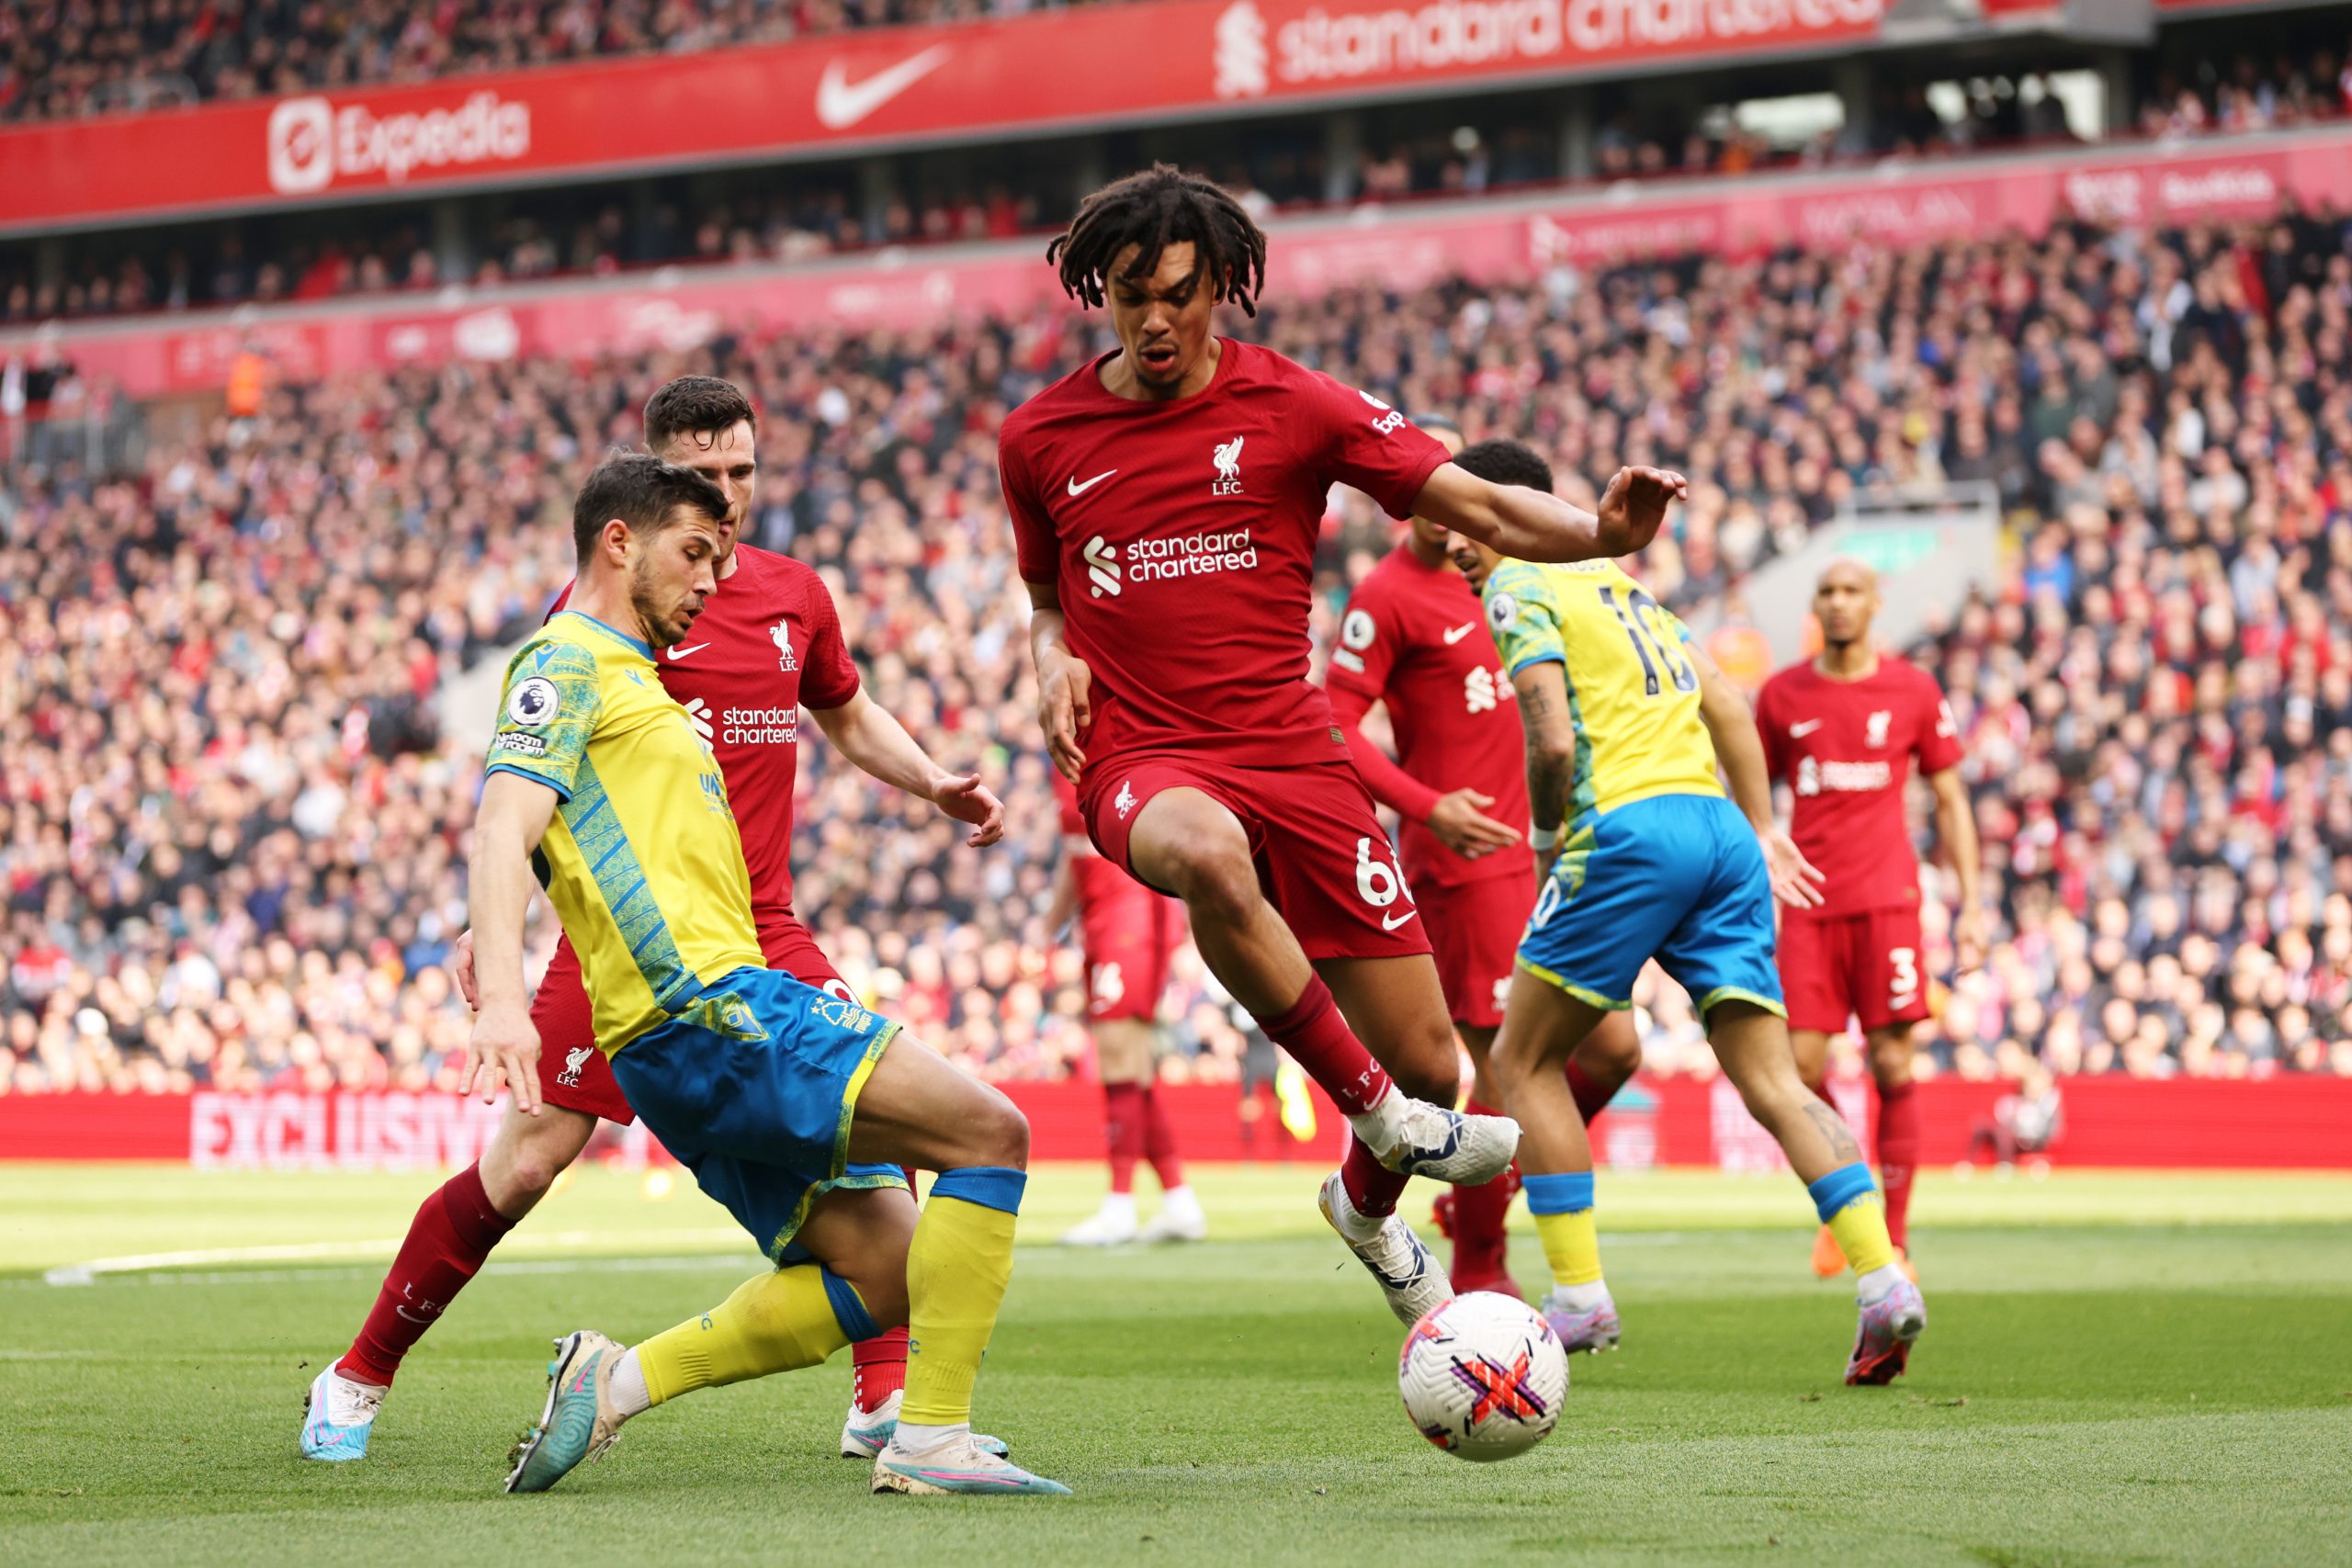 Inglaterra: Partidazo en Anfield, Liverpool 3-2 Nottingam, Darwin Núñez